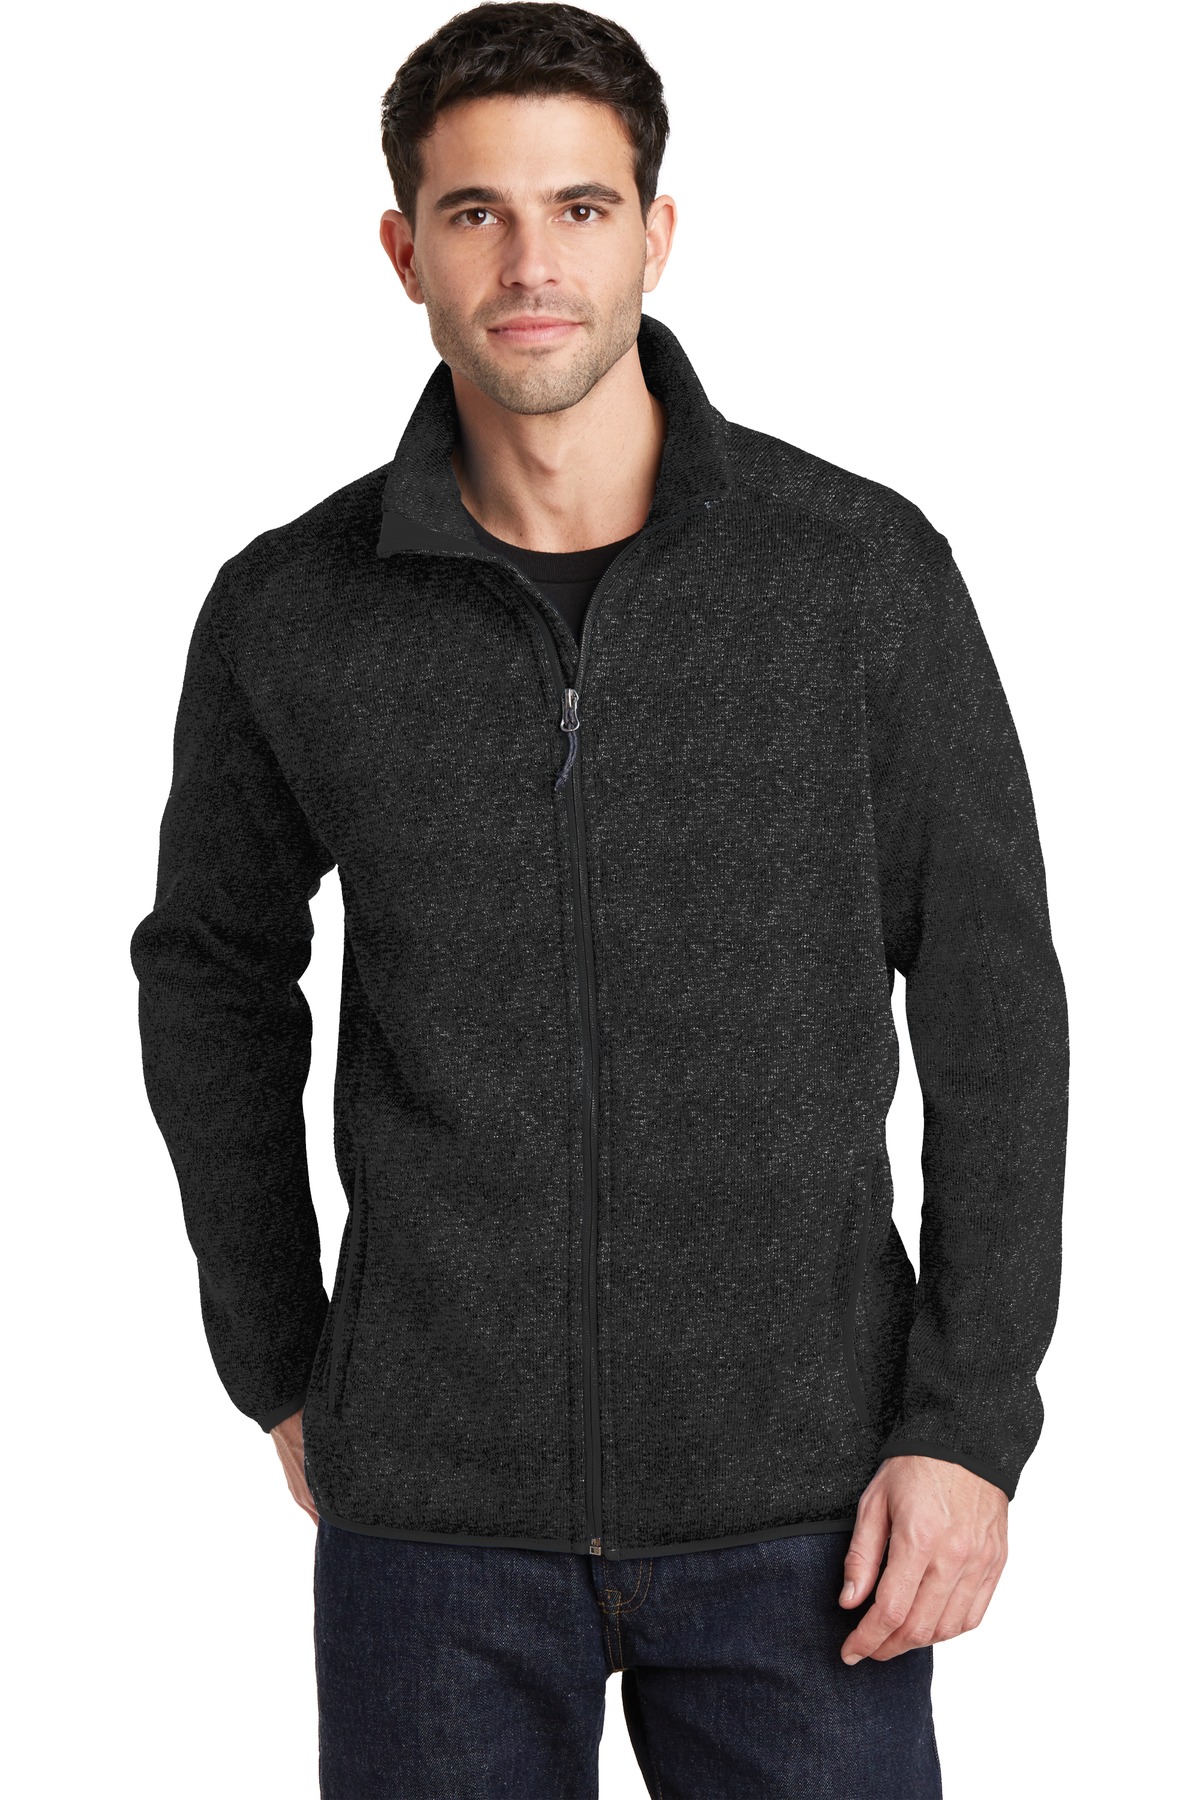 Port Authority ®  Sweater Fleece Jacket. F232